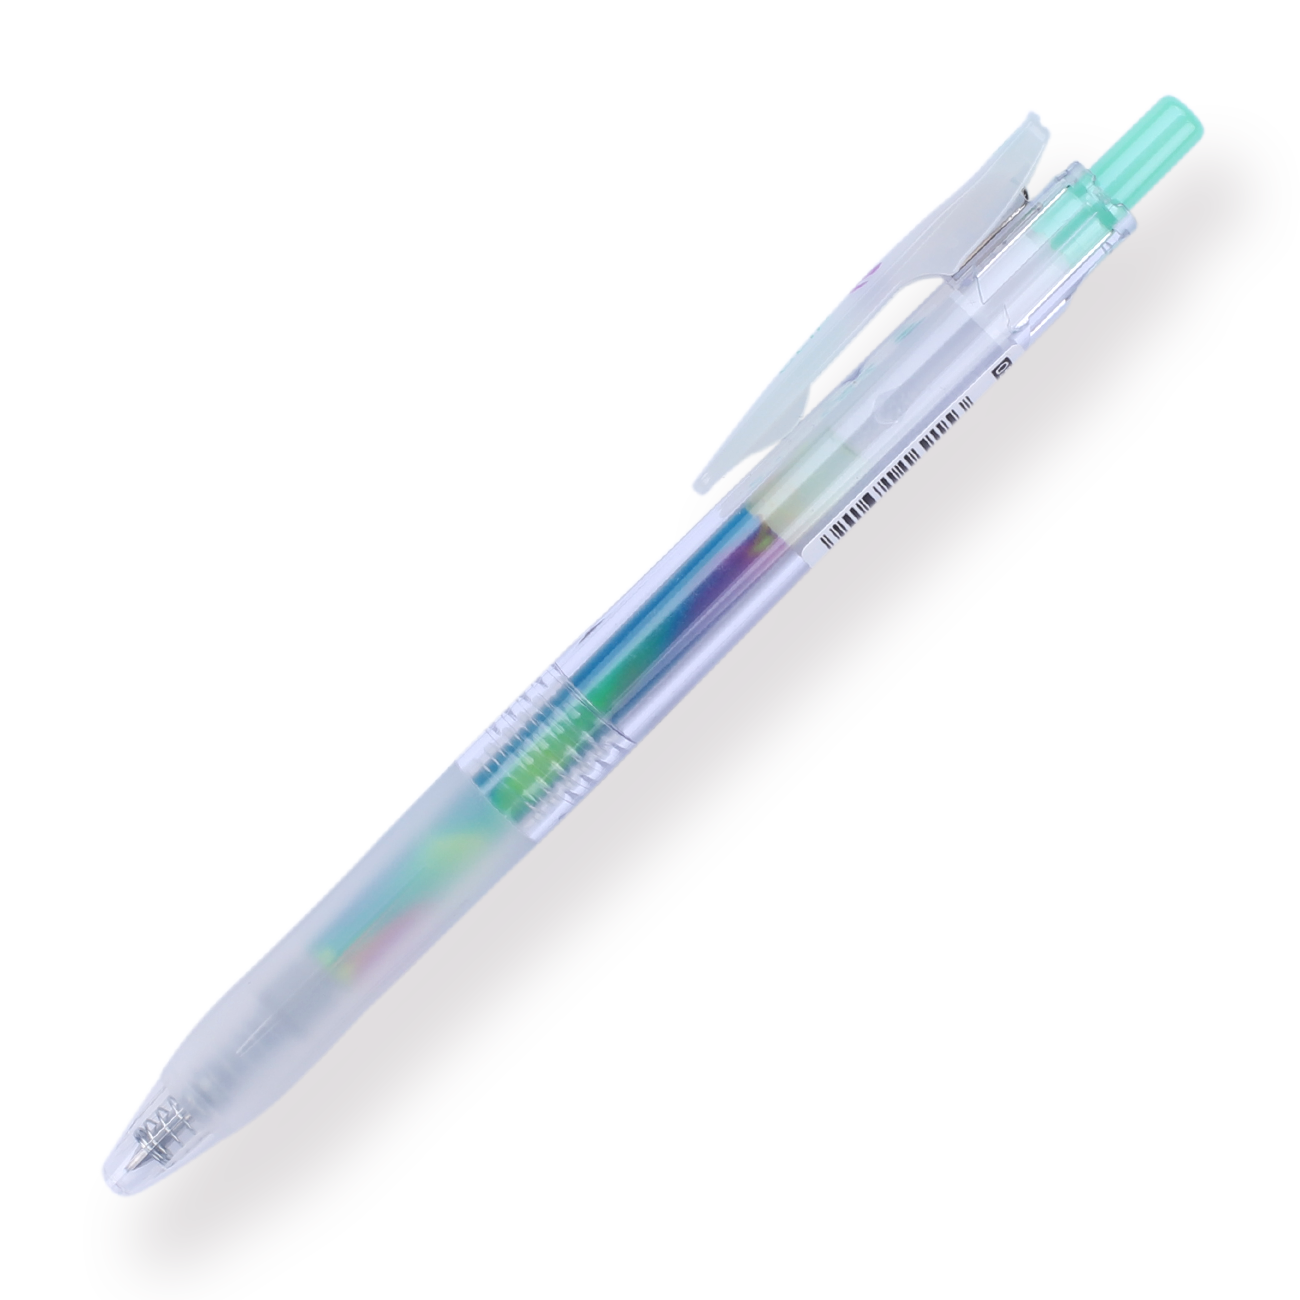 *Zebra Gel Ballpoint Pen Sarasa Clip 0.5mm 3-Color Set